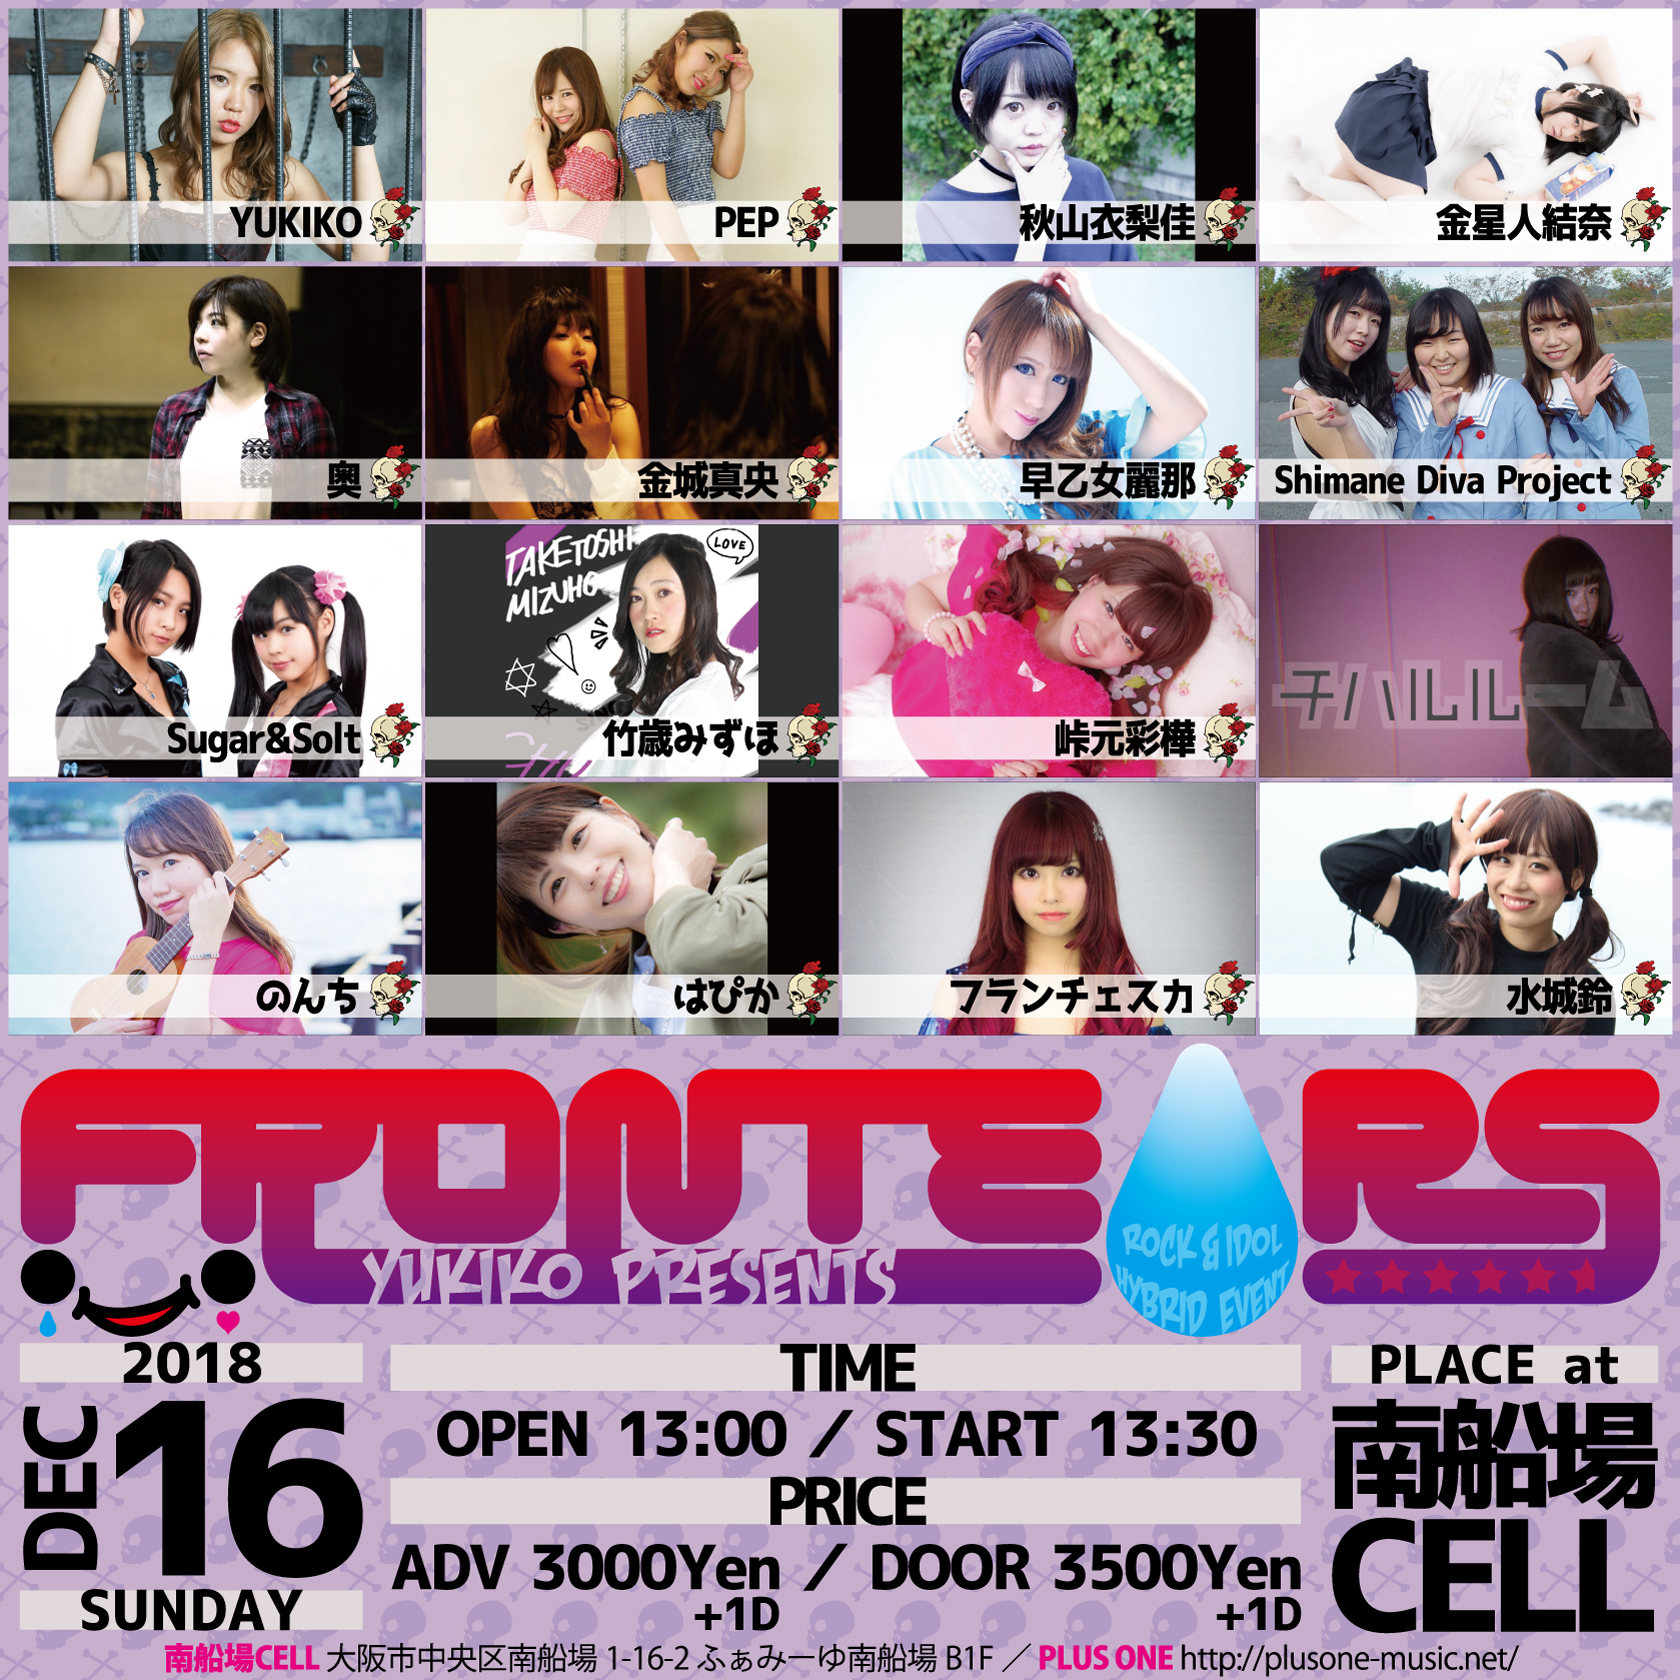 YUKIKO presents "FRONTEARS #12"